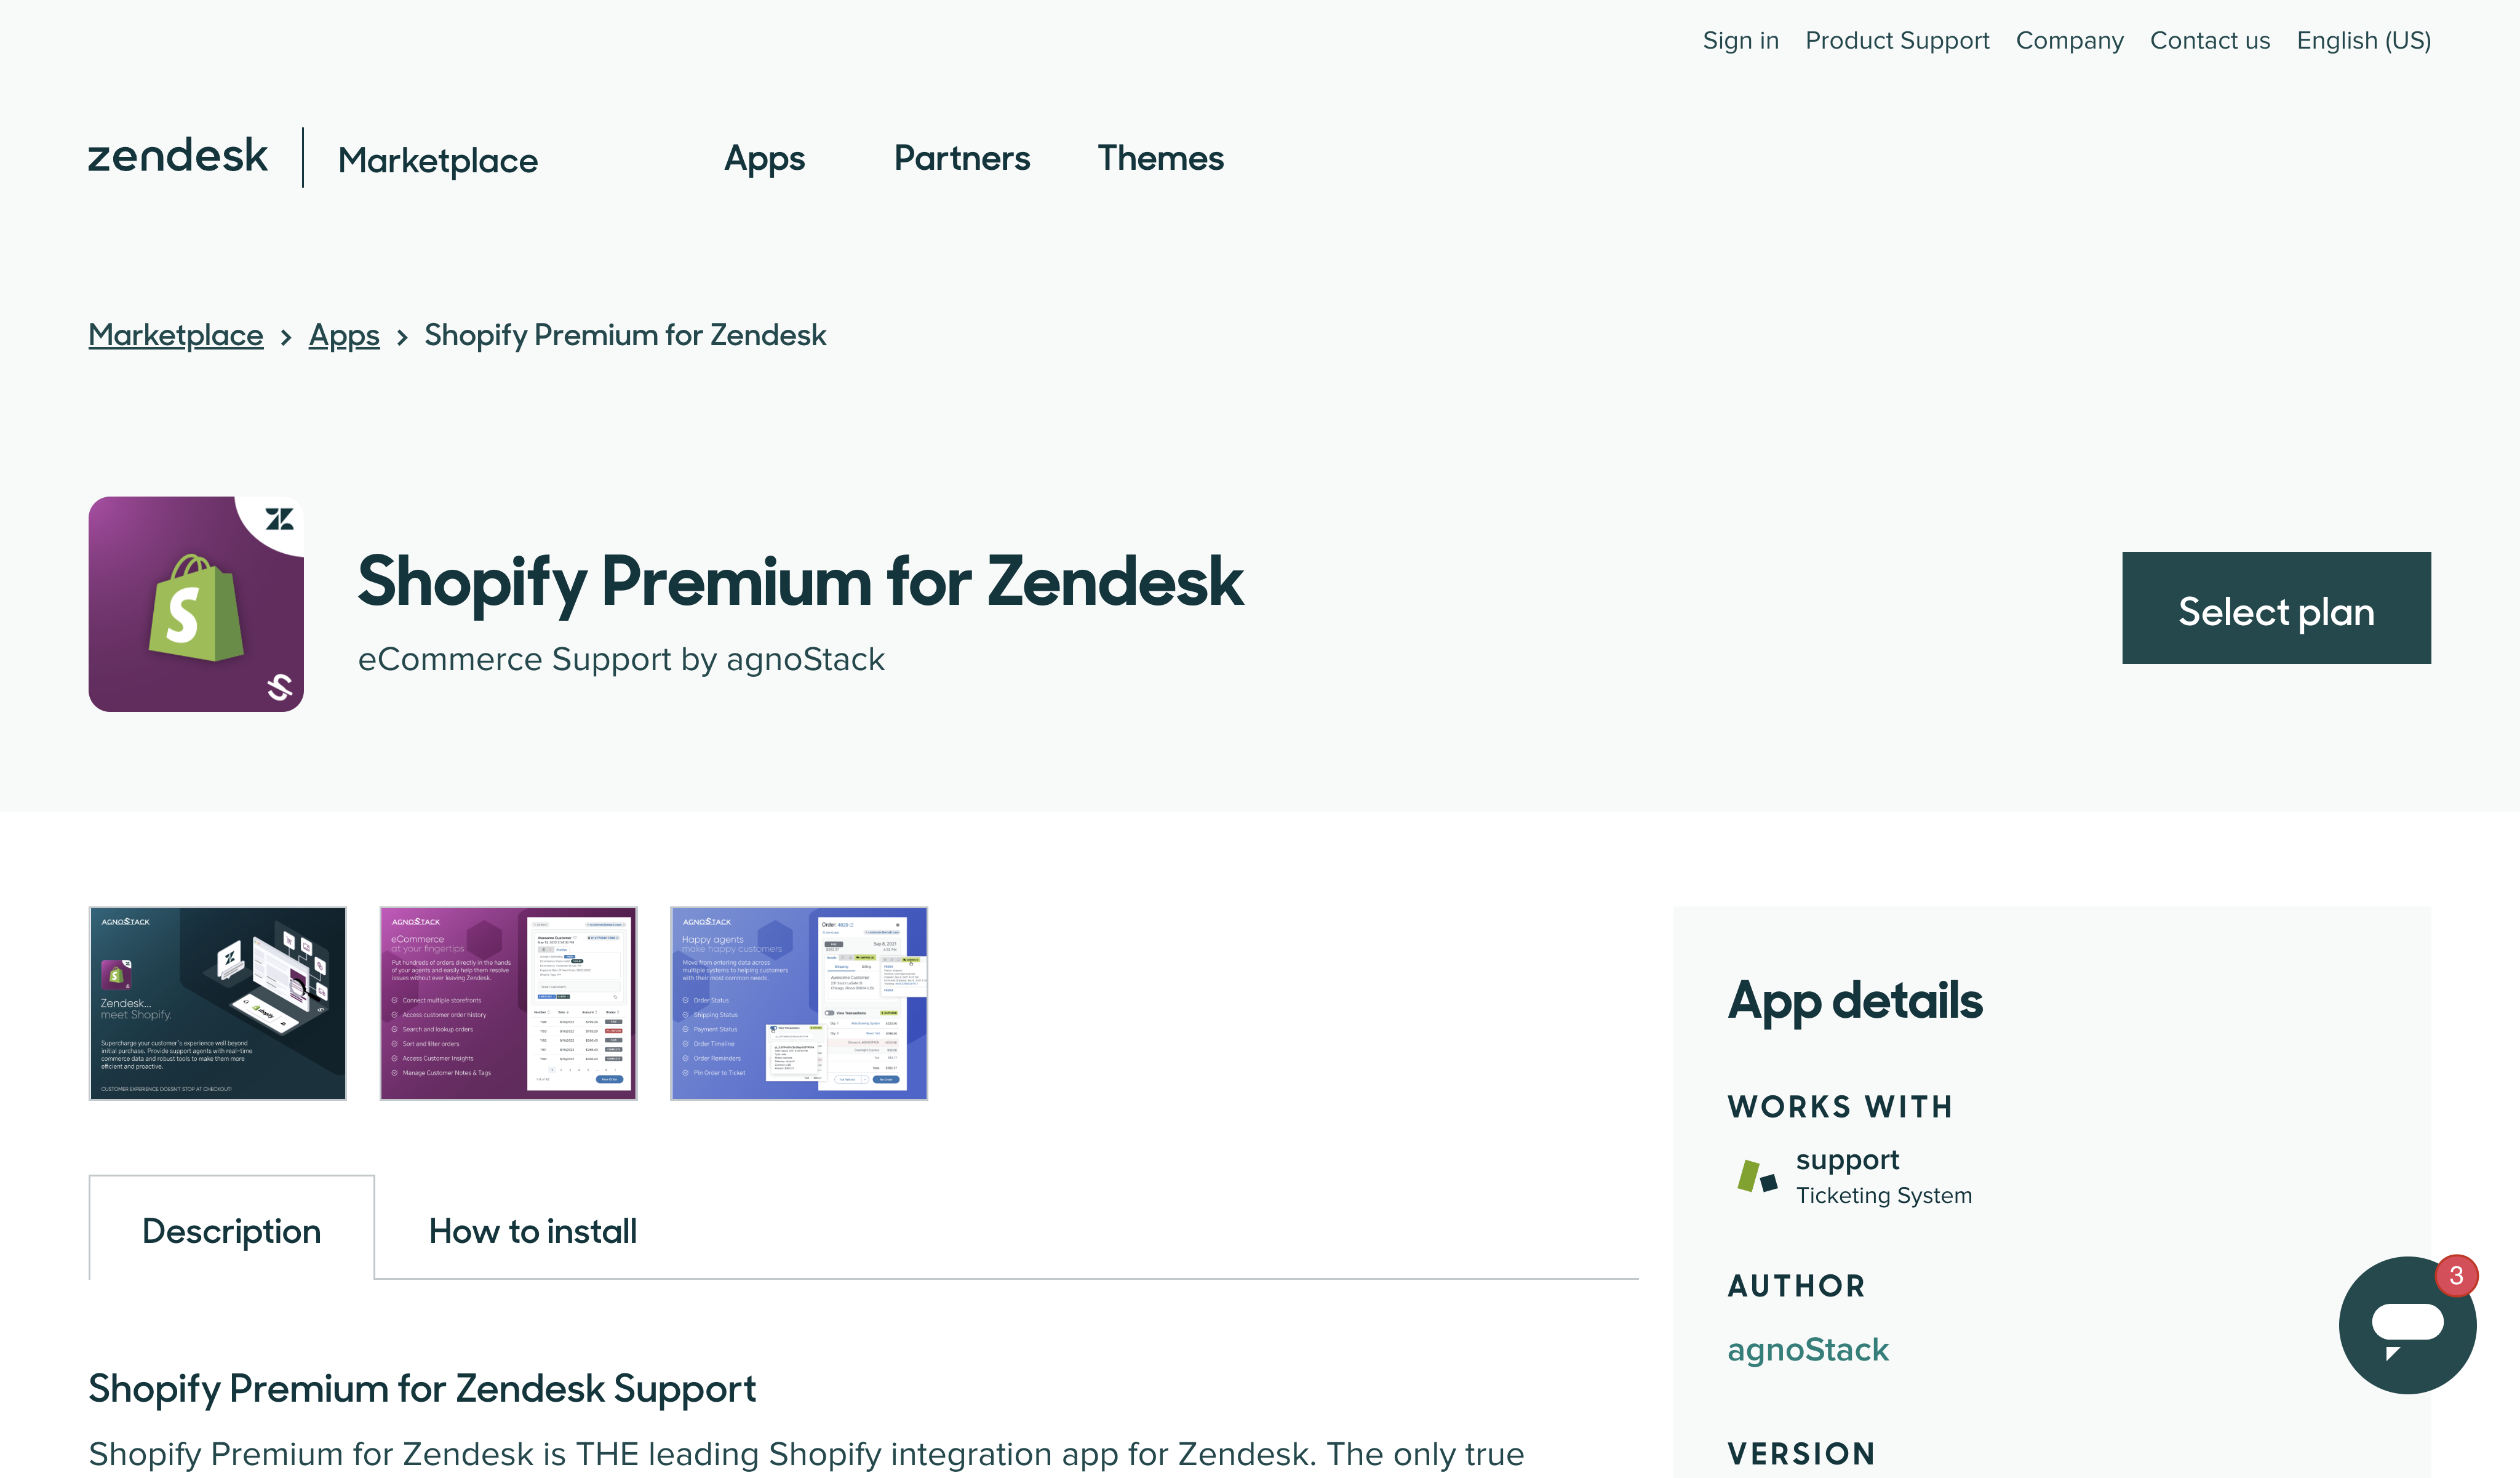 Shopify Premium for Zendesk: Zendesk Marketplace